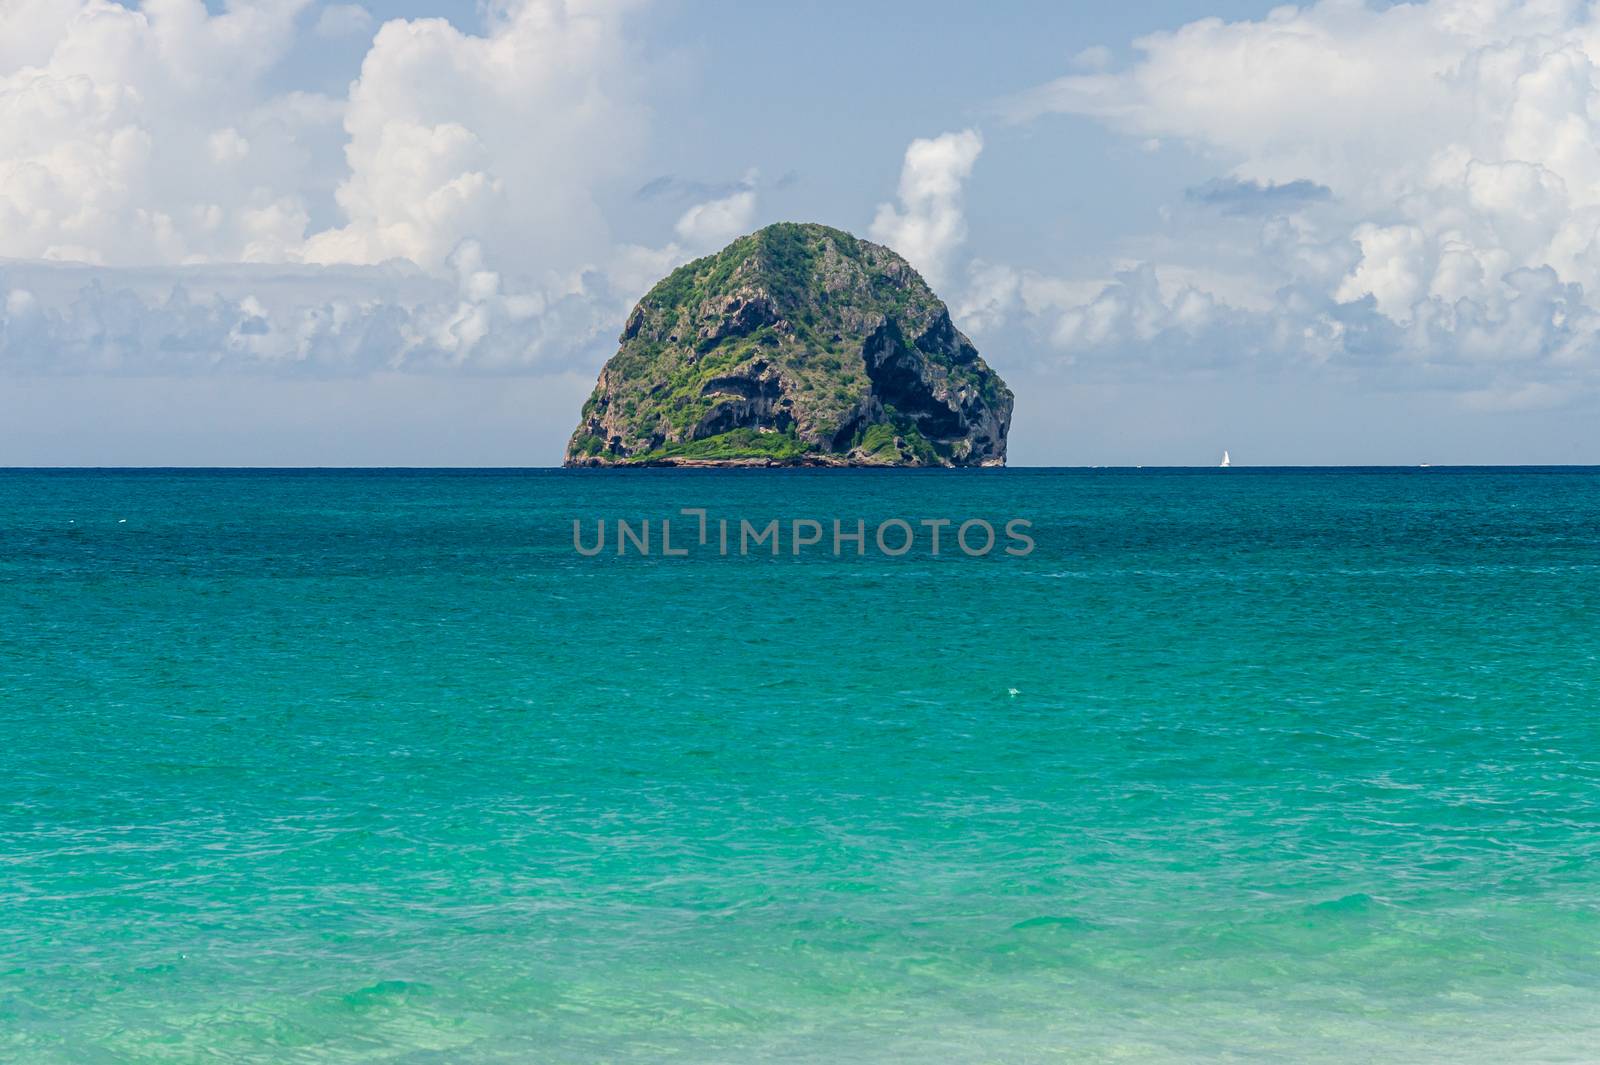 Rocher du Diamant (Diamond rock) in Martinique by mbruxelle